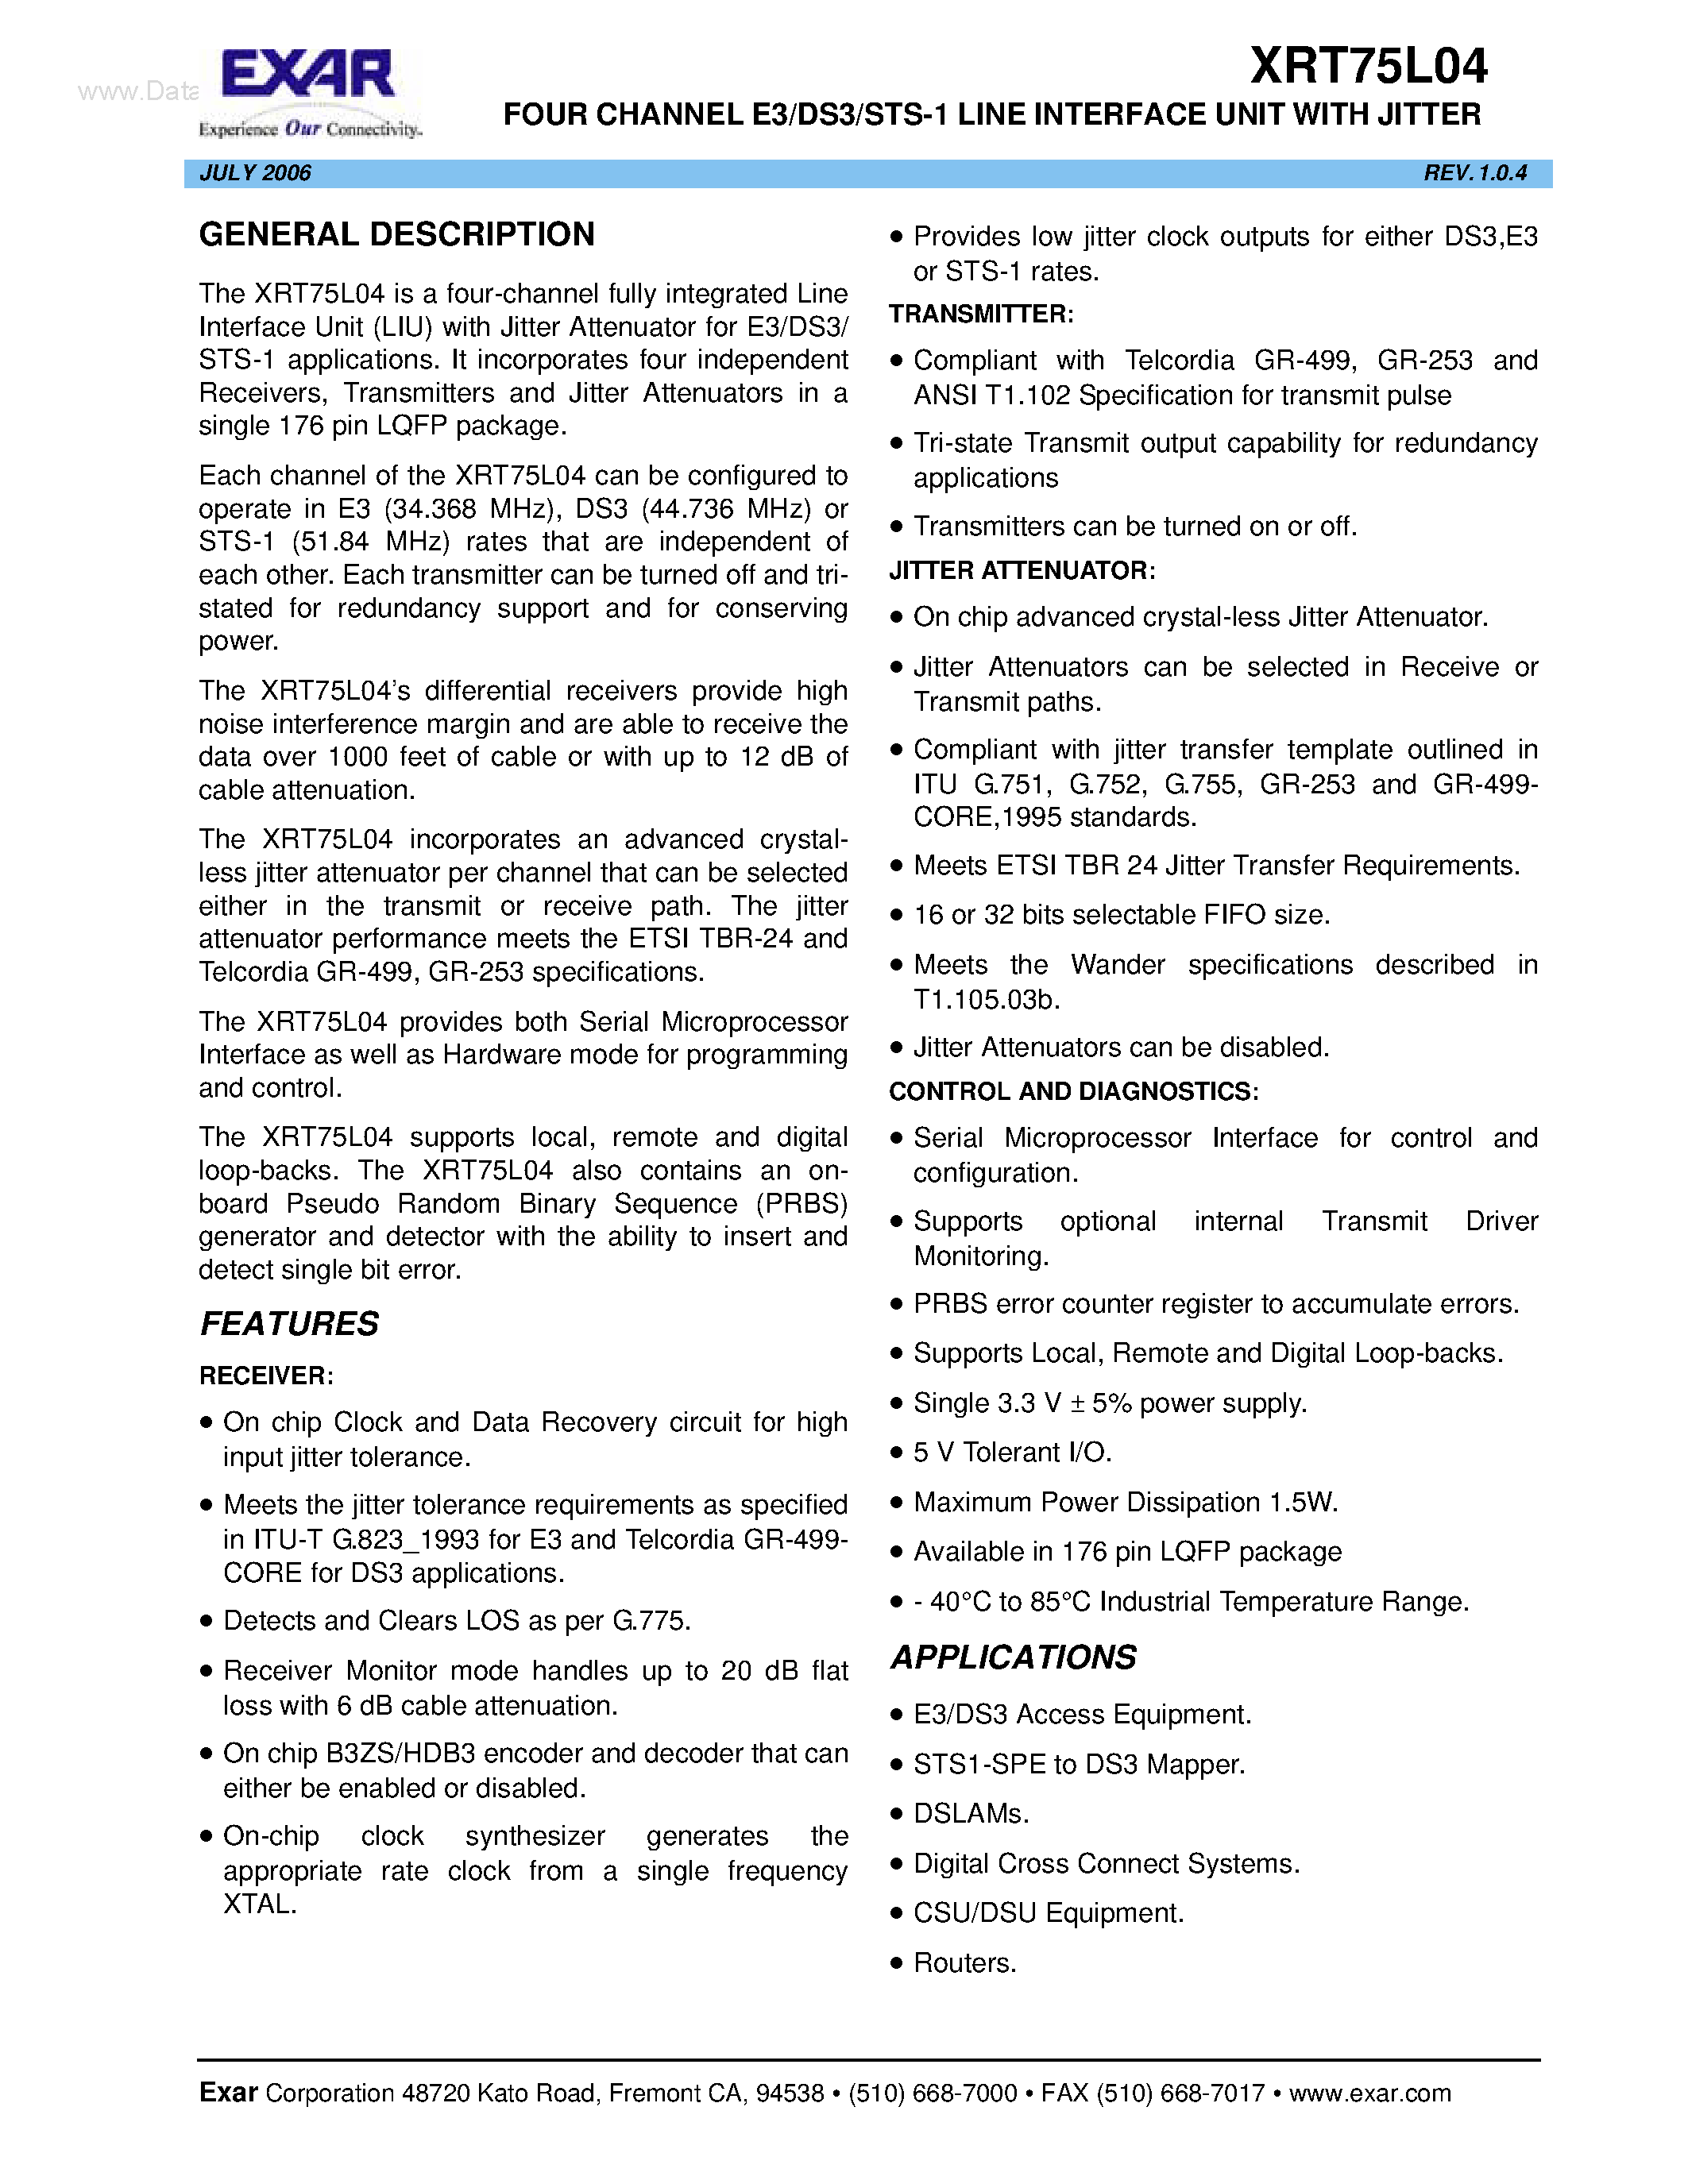 Datasheet XRT75L04 - FOUR CHANNEL E3/DS3/STS-1 LINE INTERFACE UNIT page 1